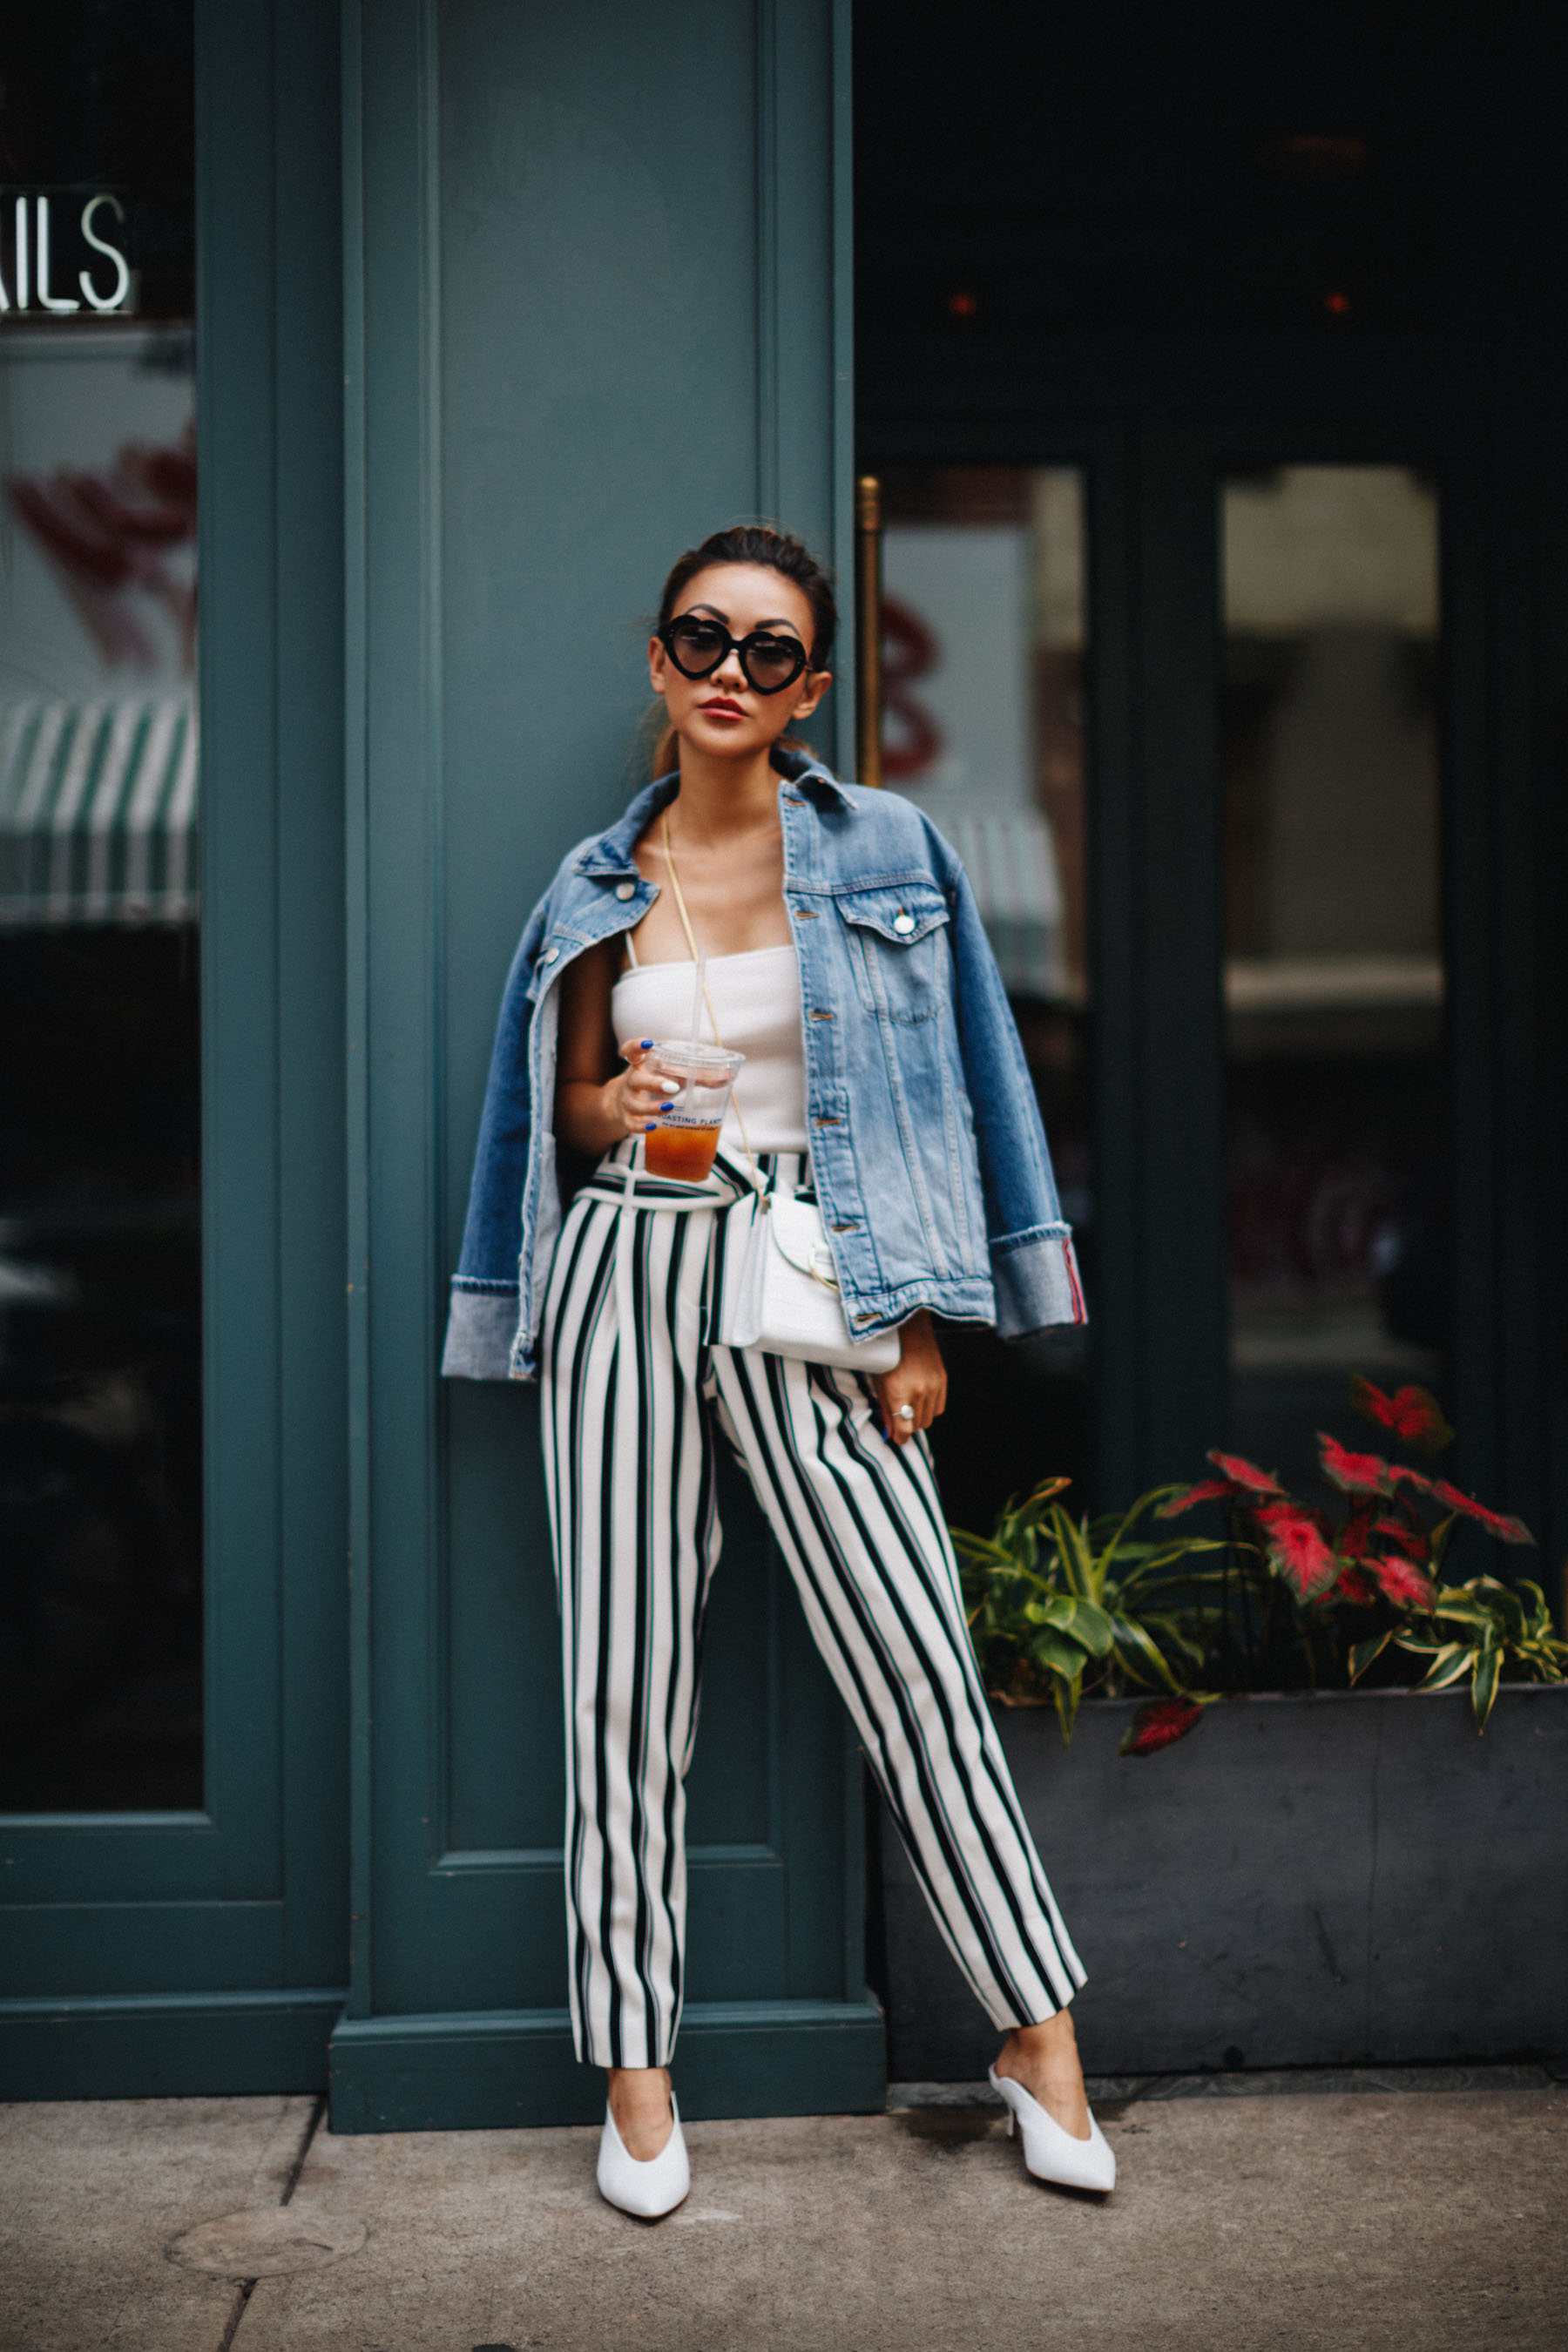 Trending Prints to Wear in 2018 - denim jacket with stripe palazzo pants // Notjessfashion.com